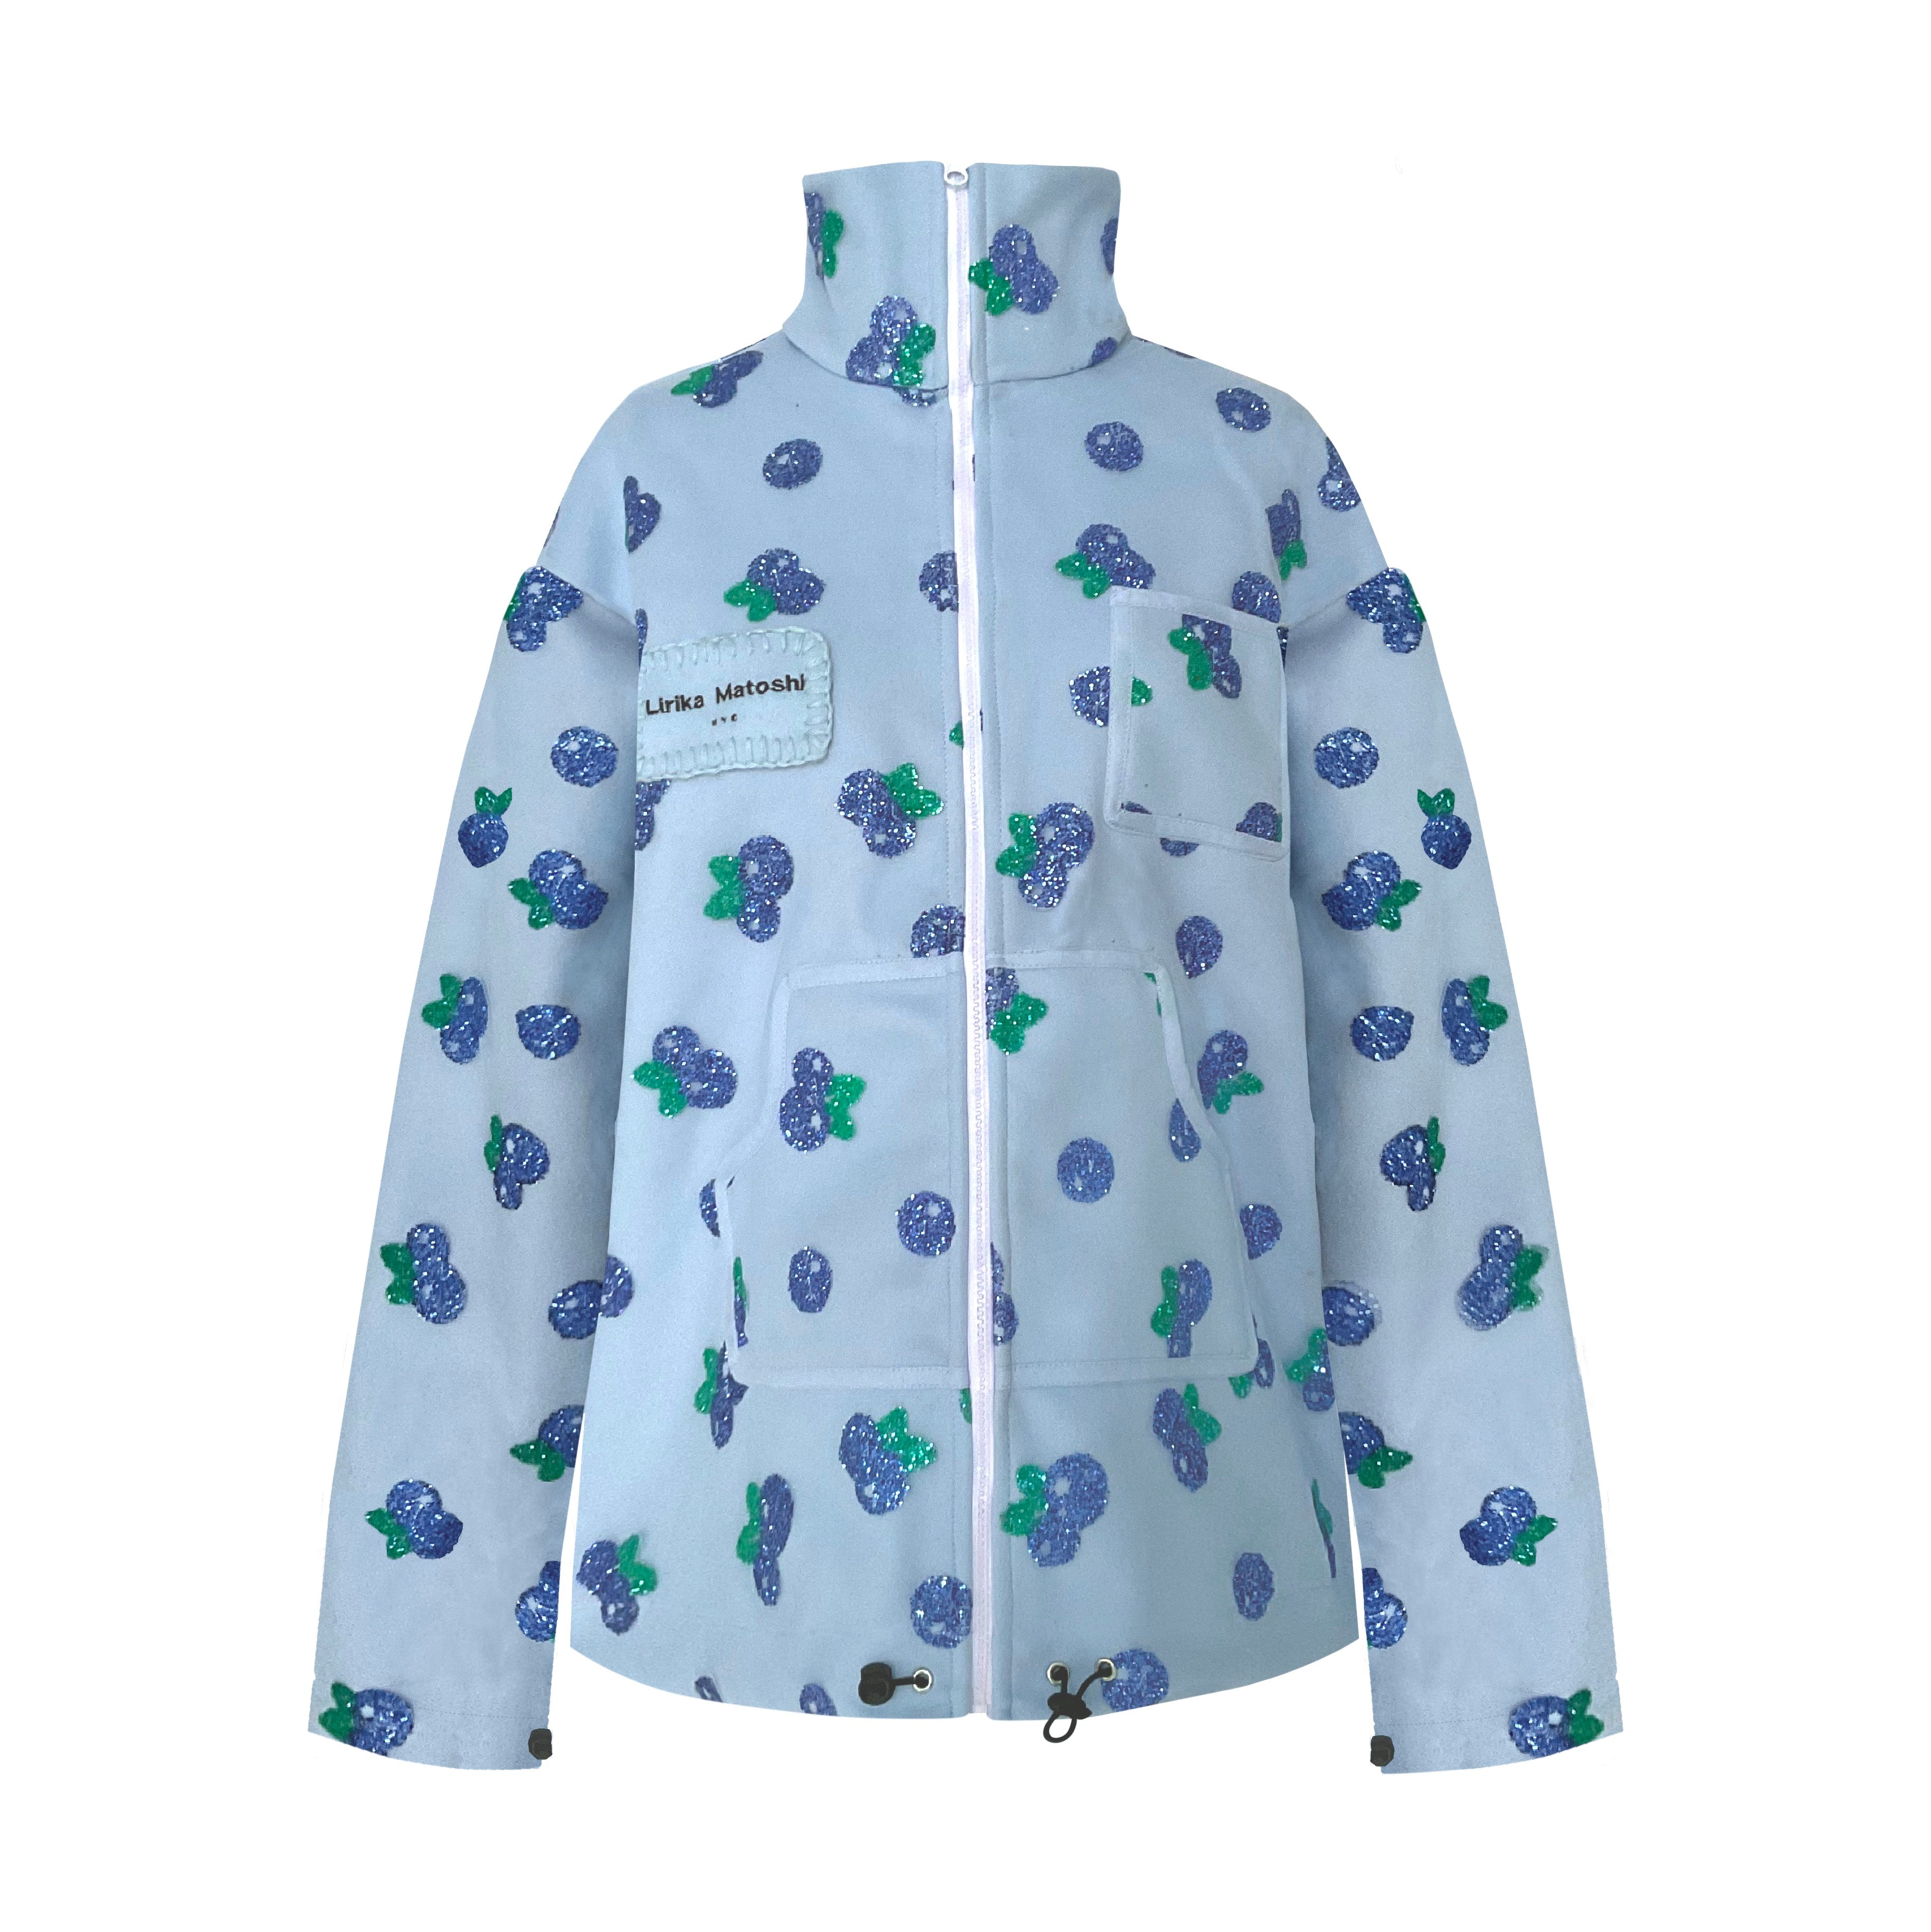 Blueberry Wool Jacket – Lirika Matoshi